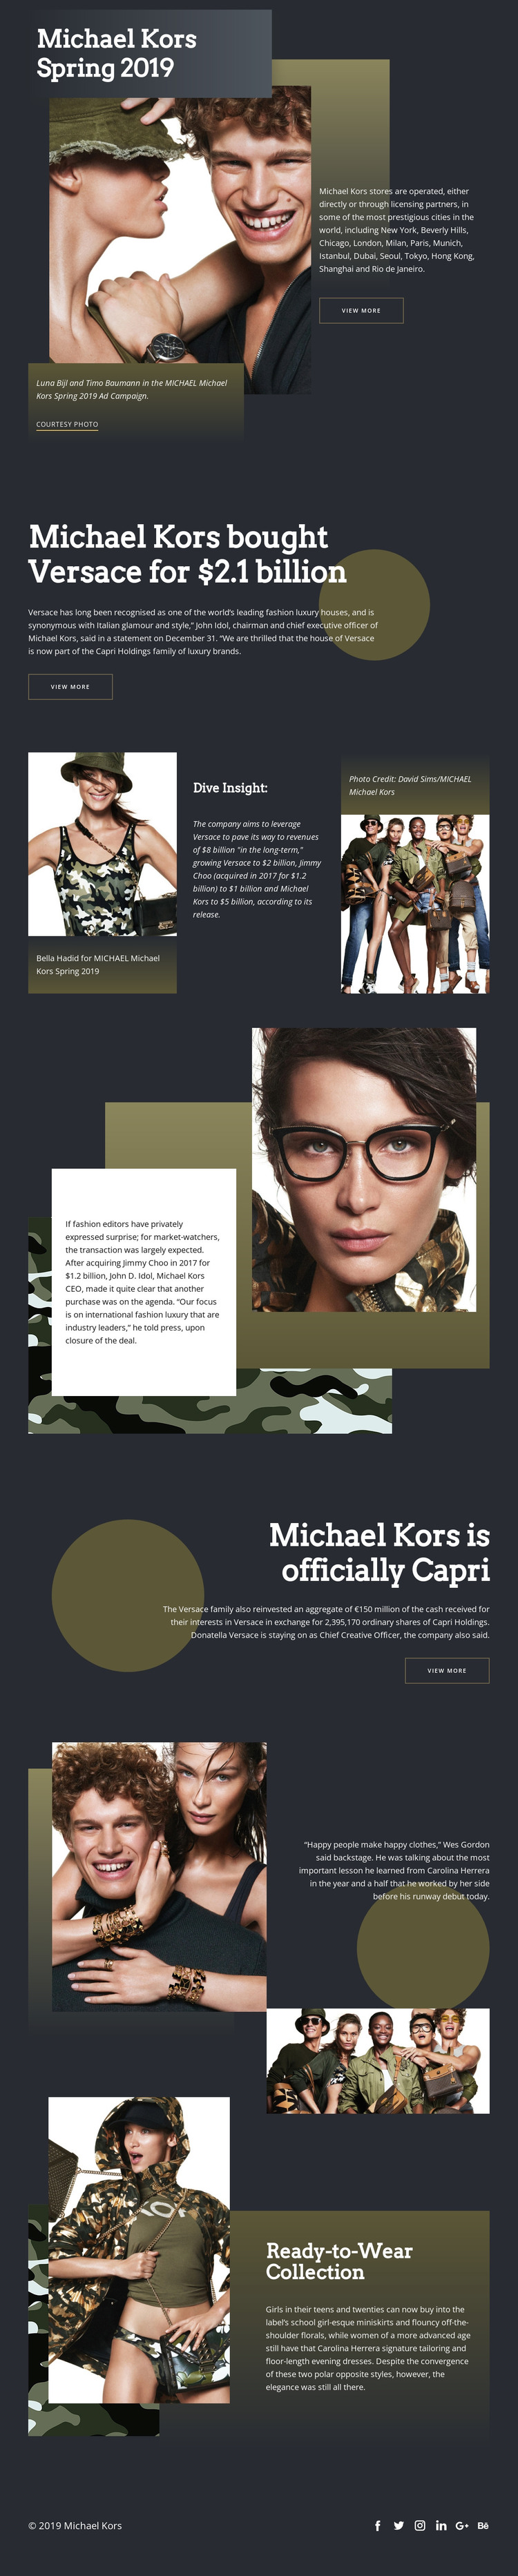 Michael Kors Dark Web Design